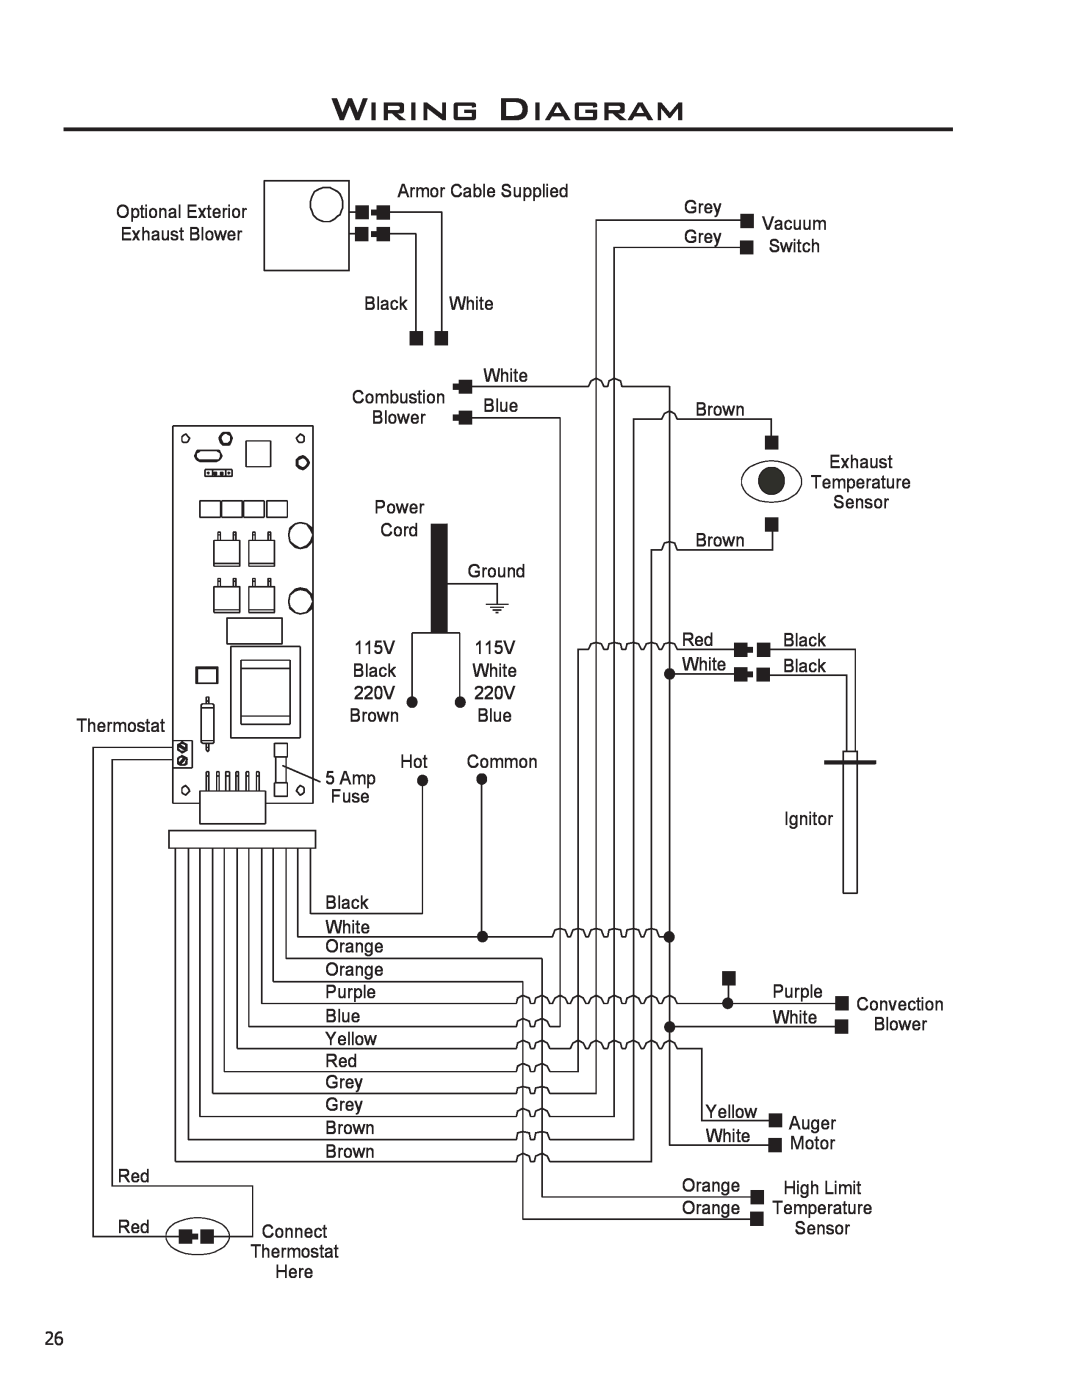 Enviro C-11150 technical manual Wiring Diagram 